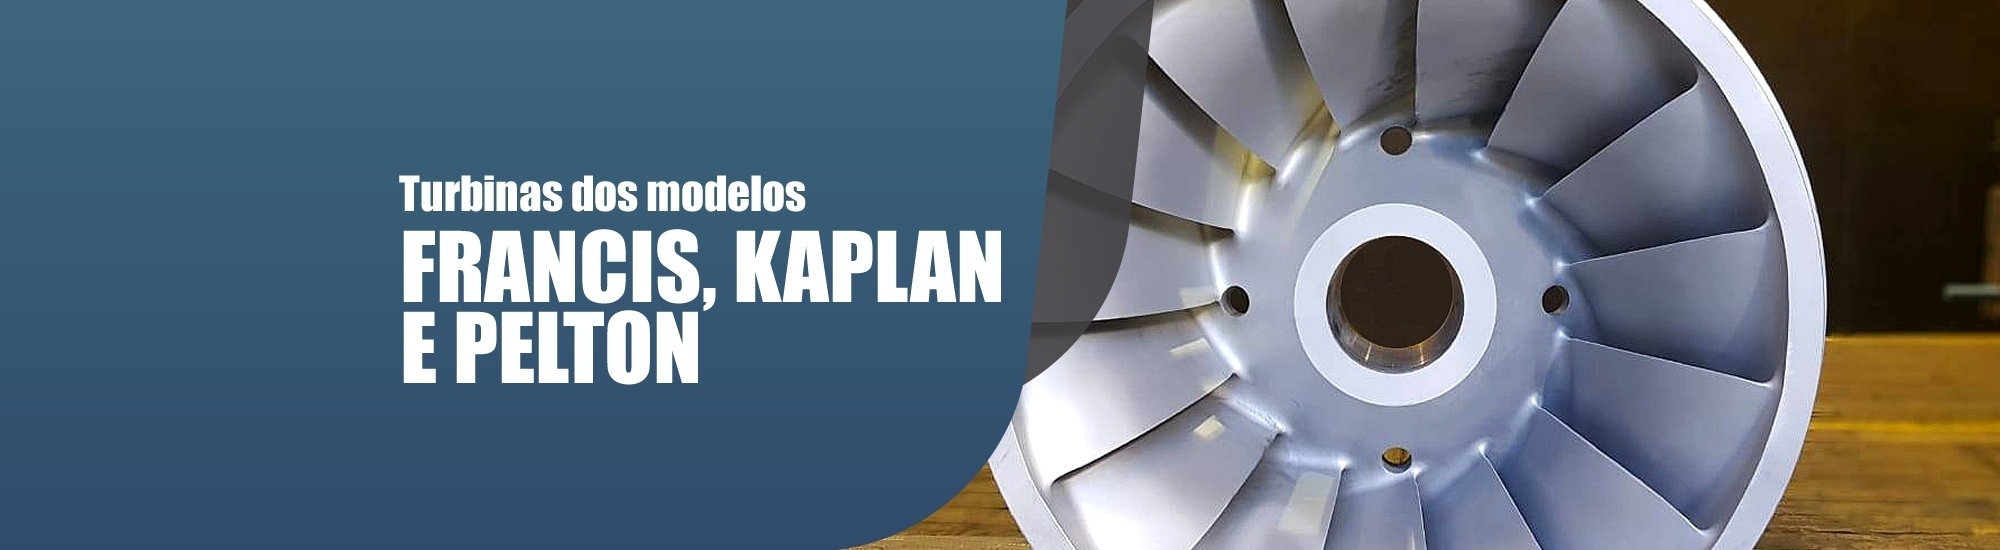 Turbinas dos modelos FRANCIS, KAPLAN E PELTON